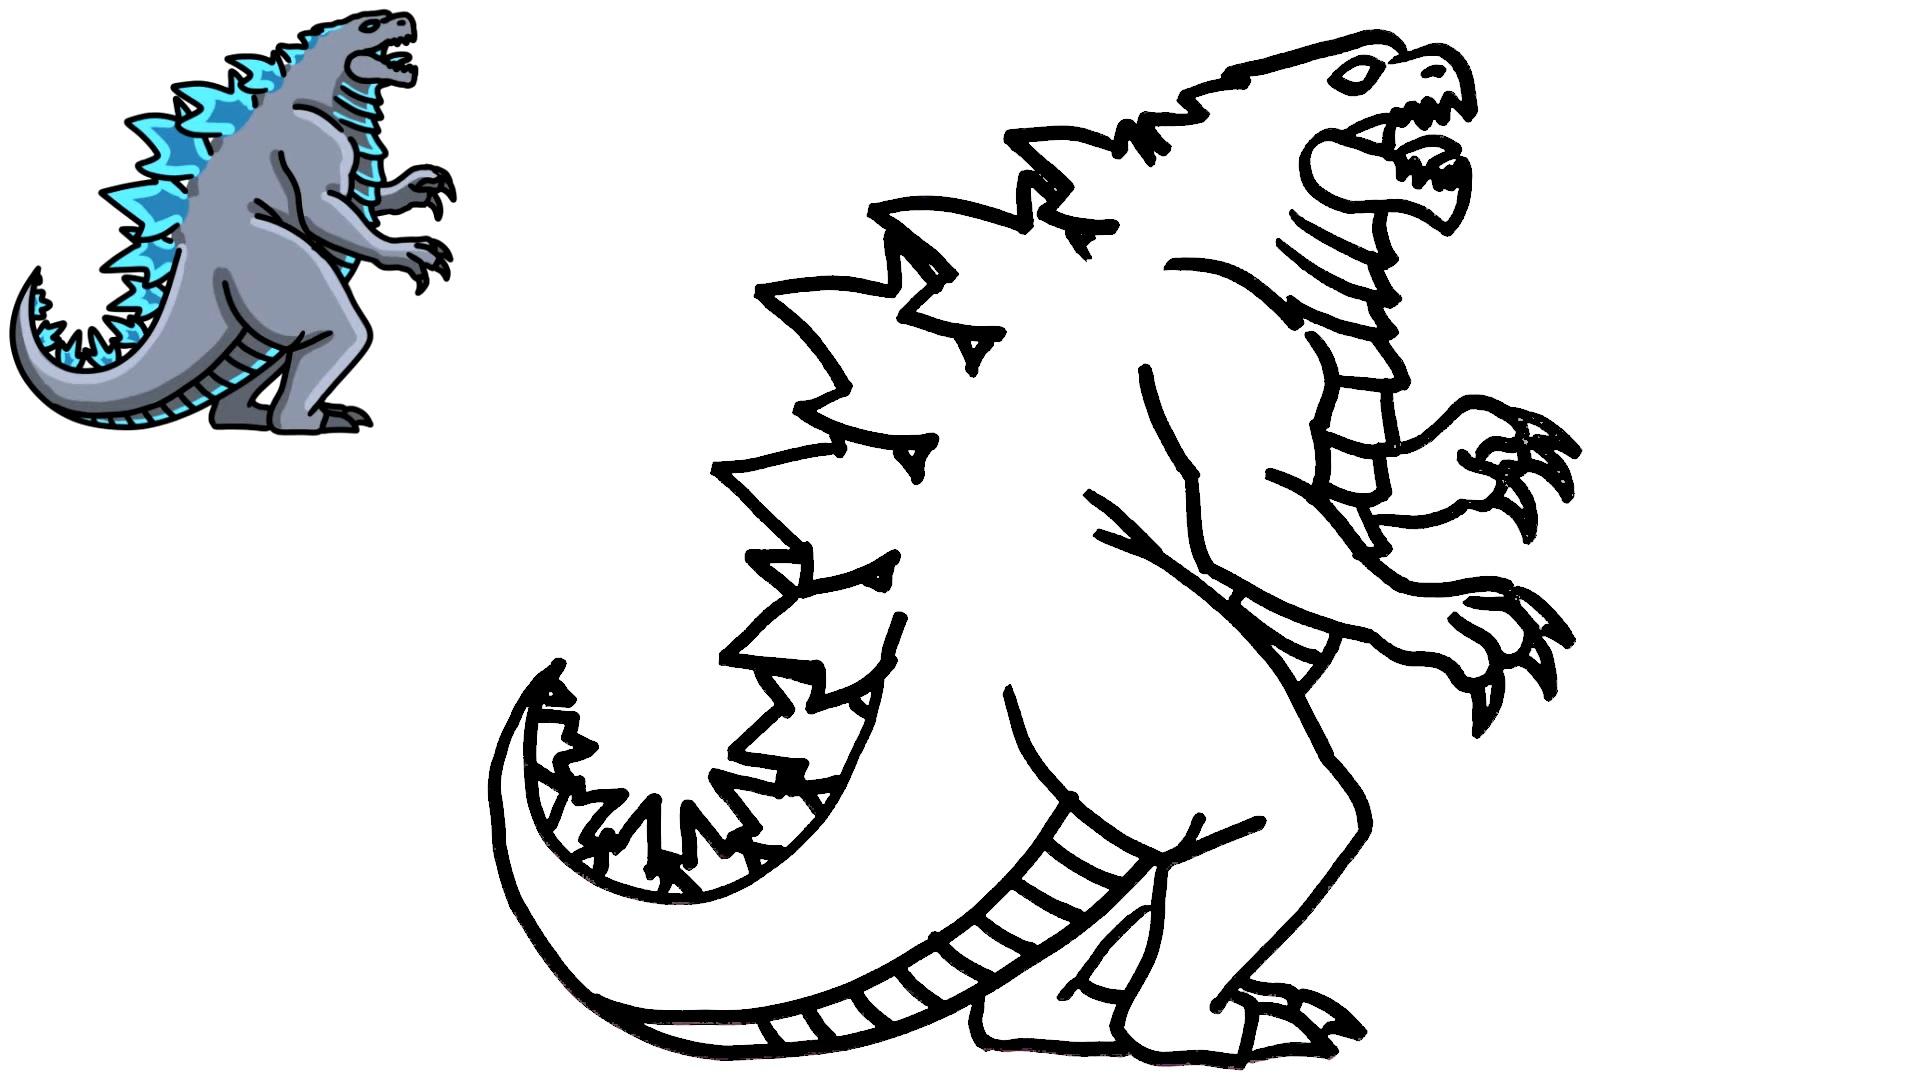 How To Draw Godzilla So That It Looks Good